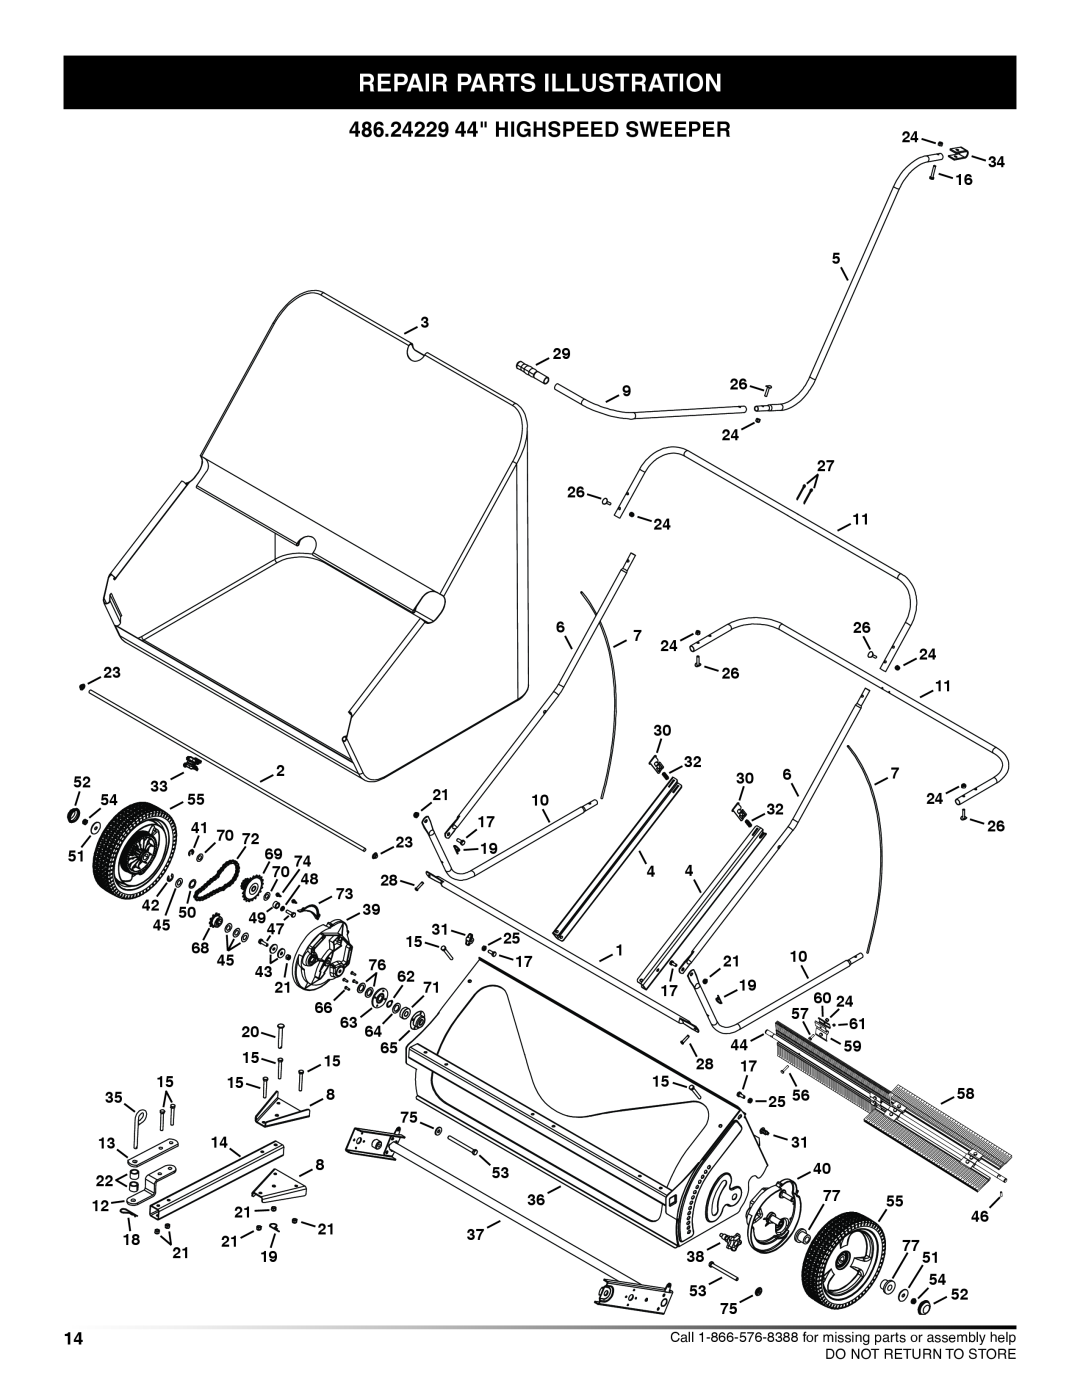 Craftsman manual Repair Parts Illustration, 486.24229 44 Highspeed Sweeper 